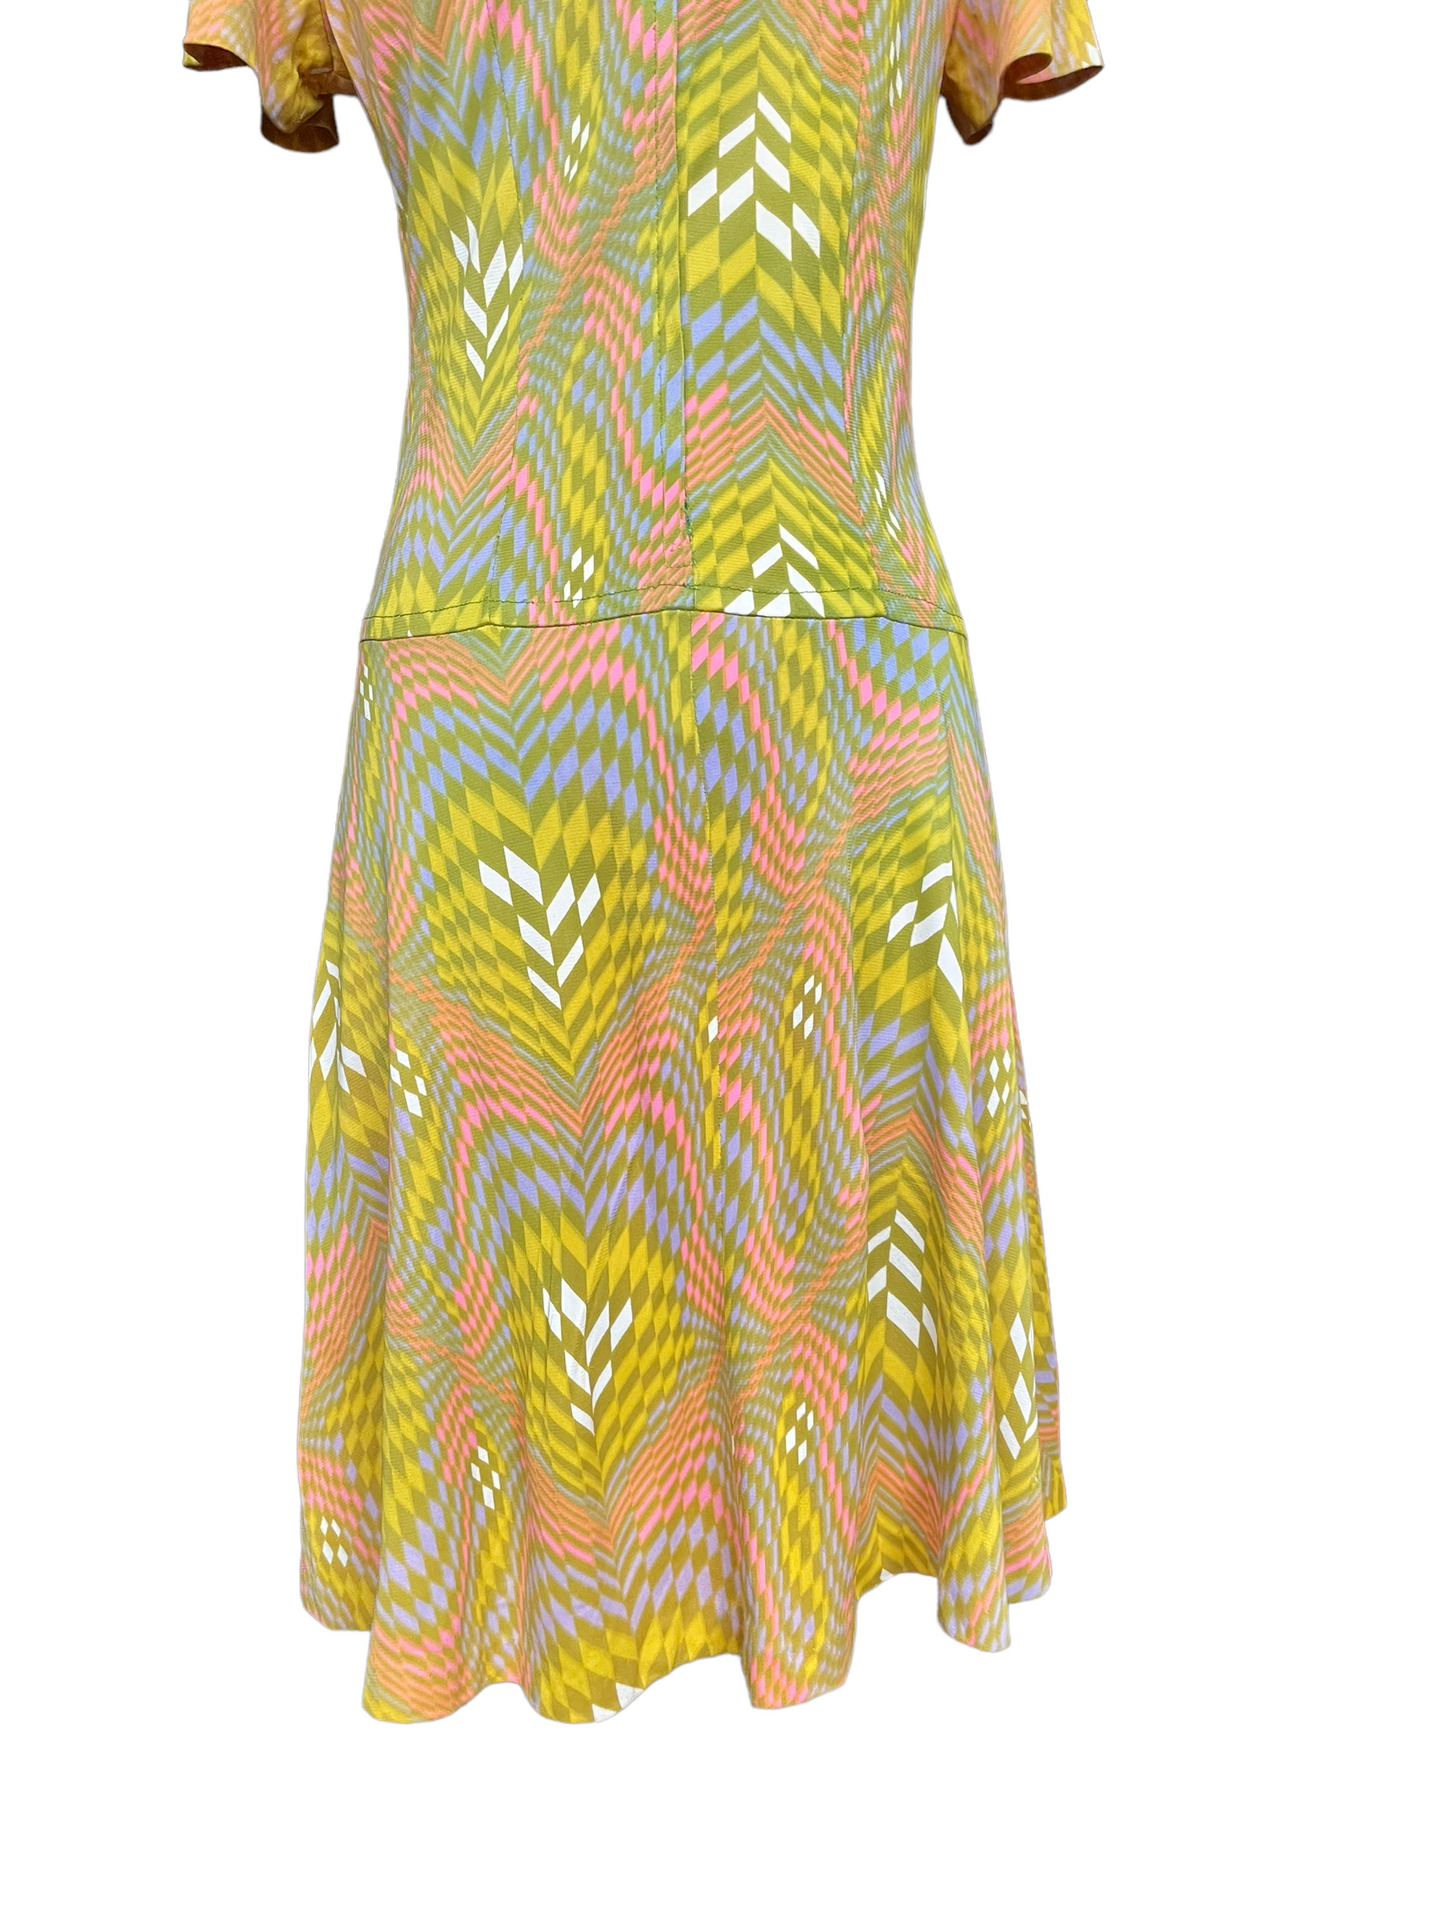 Back skirt view of Vintage 1960s Geometric Pattern Dress SZ M | Seattle Vintage Dresses | Barn Owl Vintage